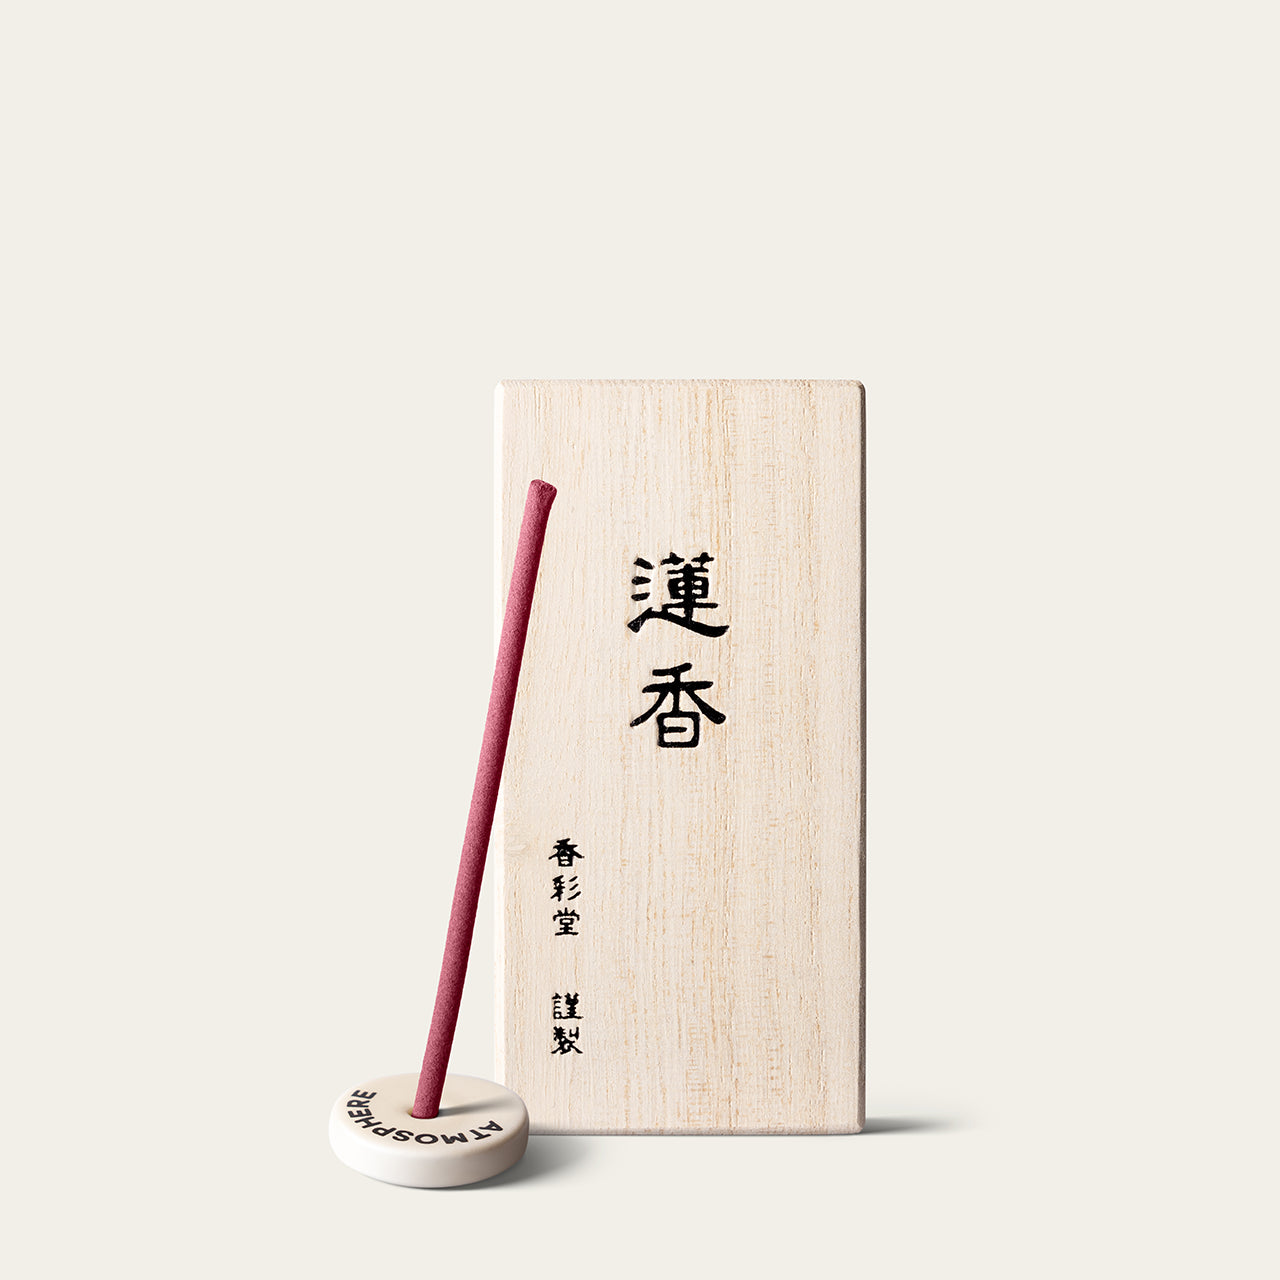 Kousaido Ancient City Lotus Hasuka Japanese incense sticks (30 sticks) with Atmosphere ceramic incense holder